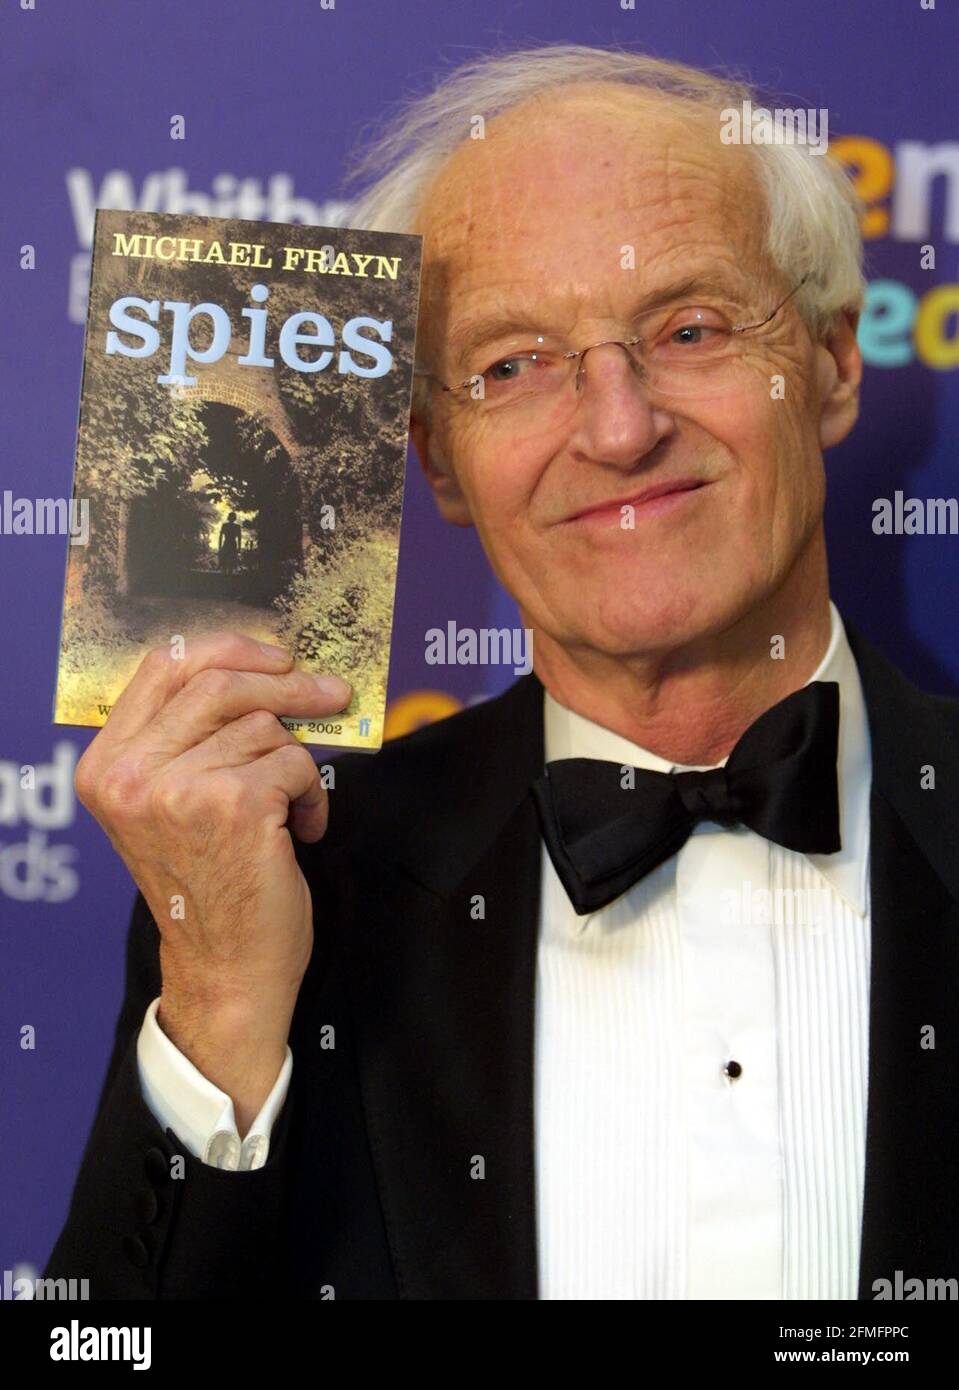 Whitbread Book of the Year.....Autoren in der engeren Auswahl... Michael Frayn...Spies (Novel Award) pic David Sandison 20/1/2003 Stockfoto